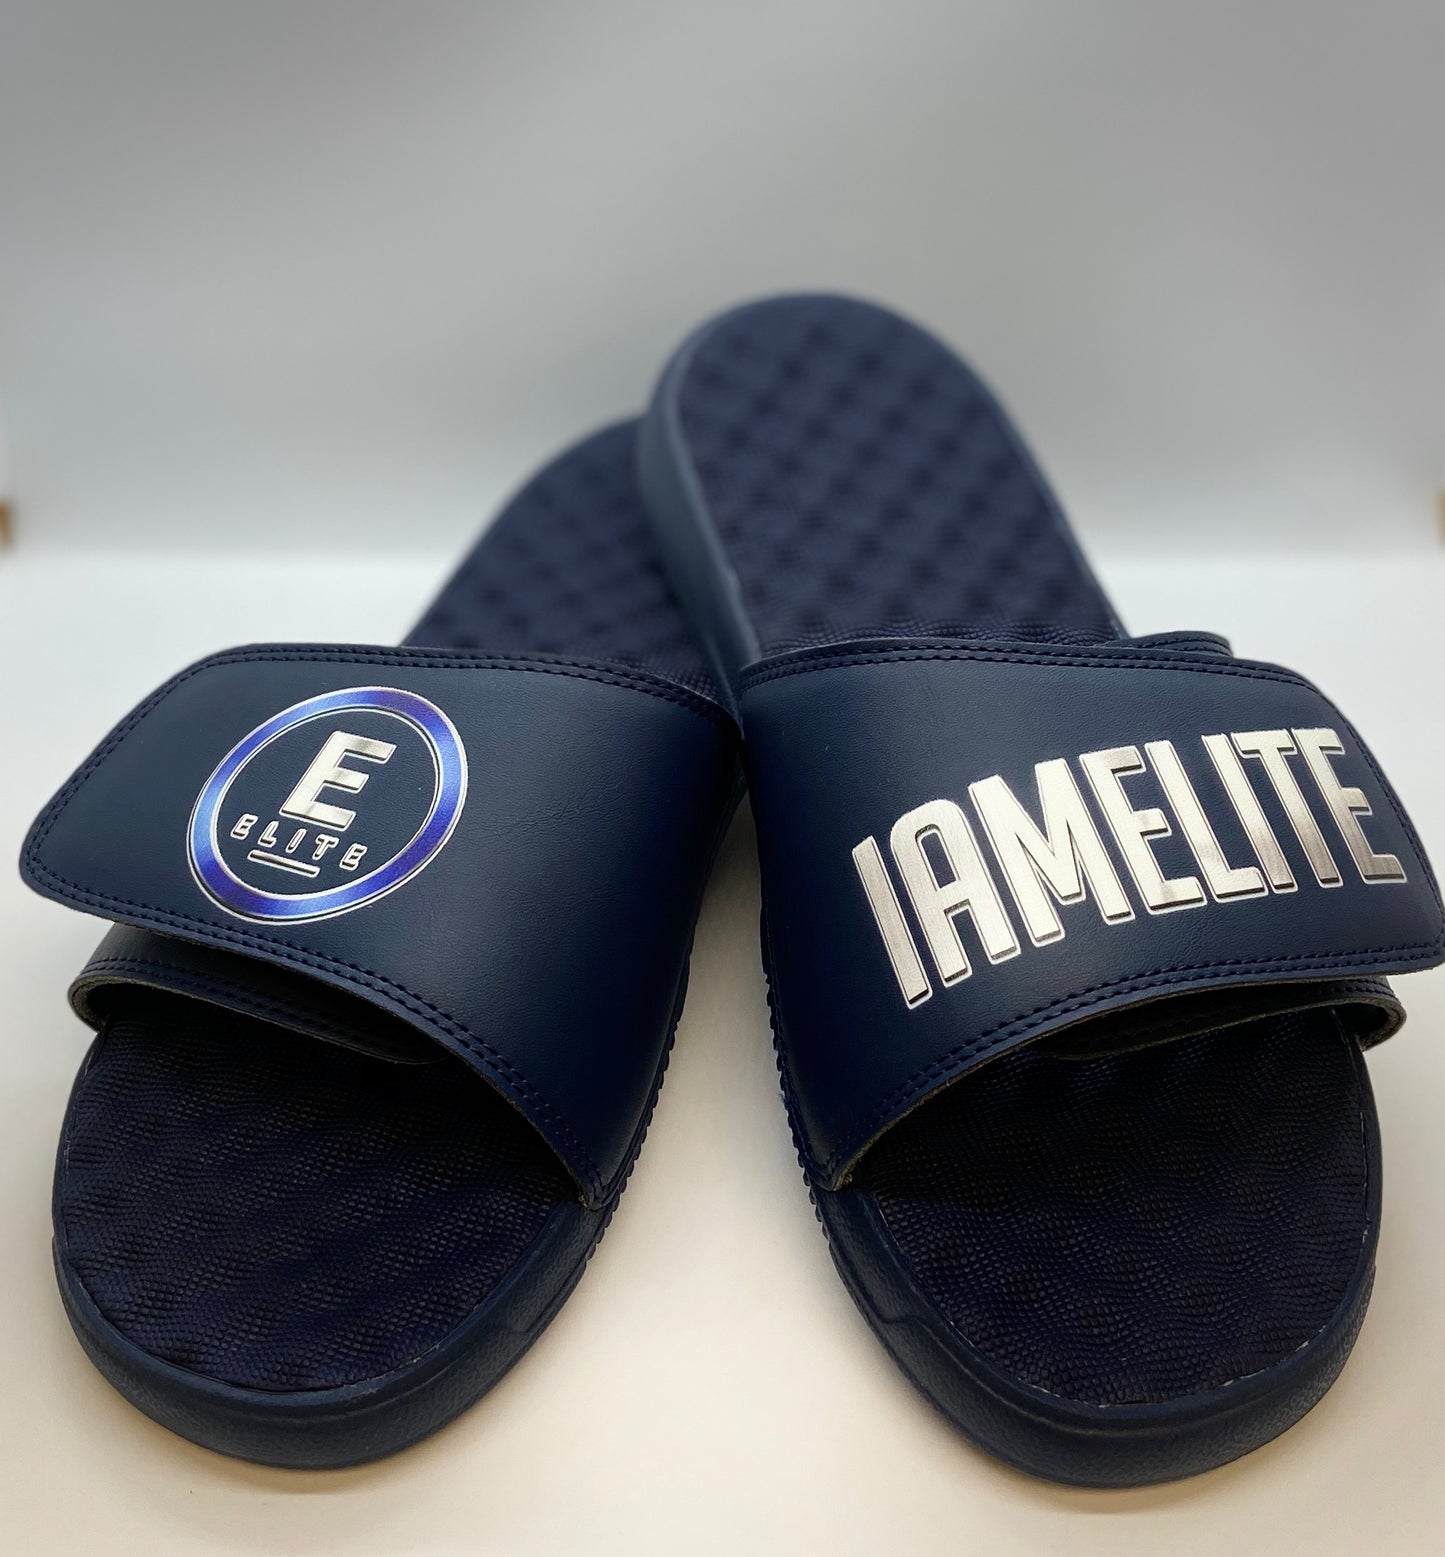 IAMELITE® Brand Slides